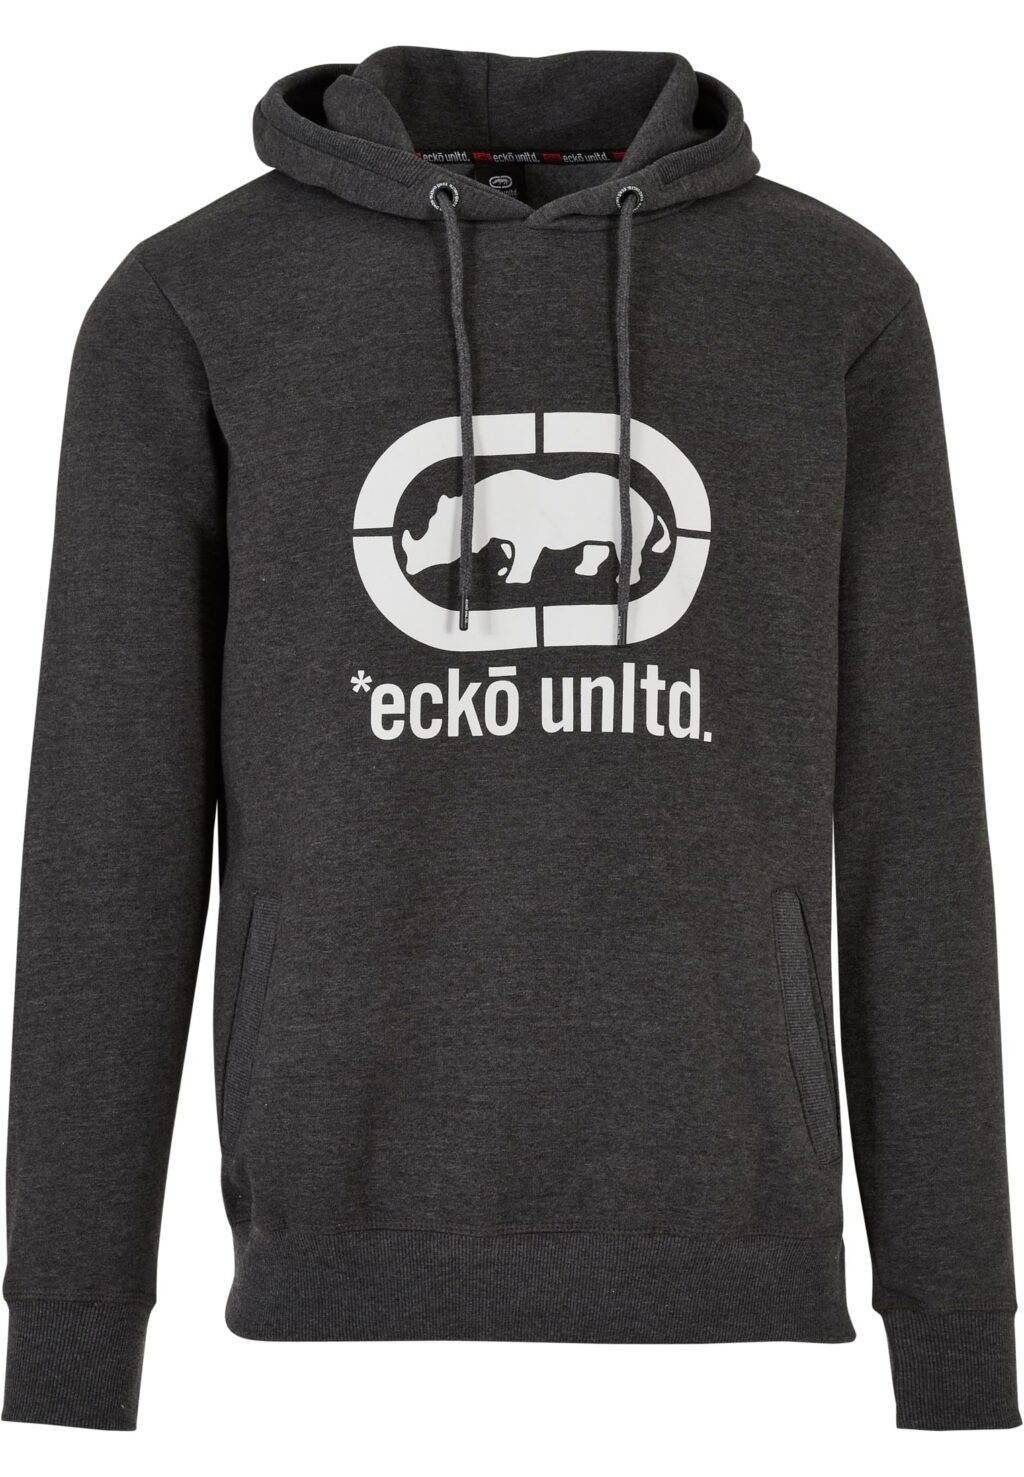 Ecko Unltd. Base Hoody charcoal ECKOHD1034